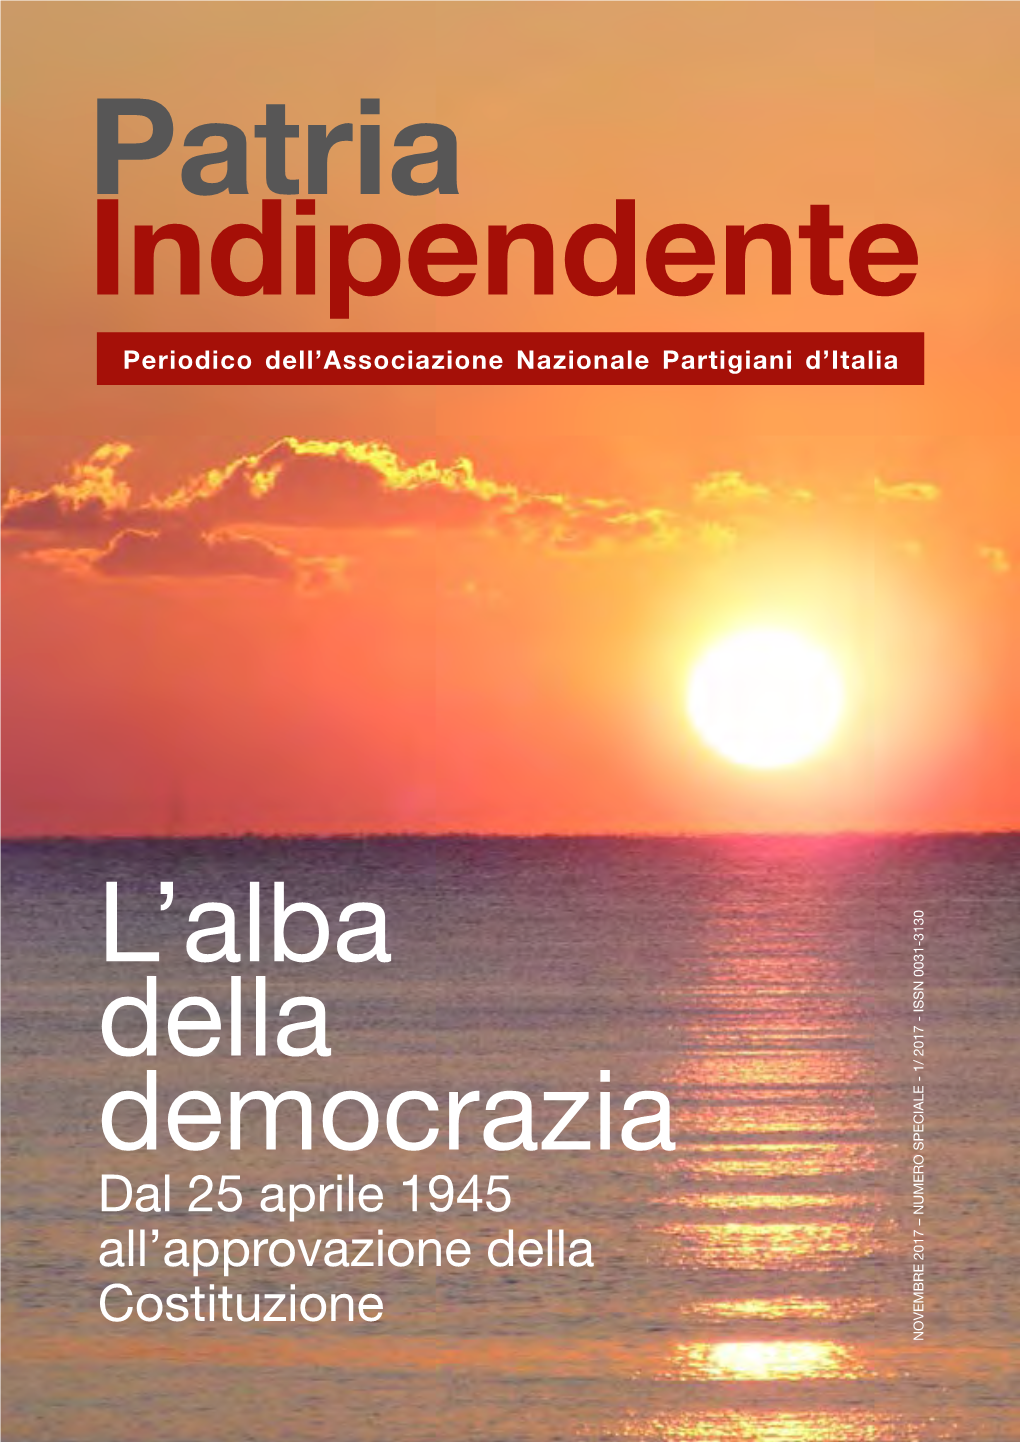 Patria-Indipendente-Speciale-Cartaceo-2017.Pdf